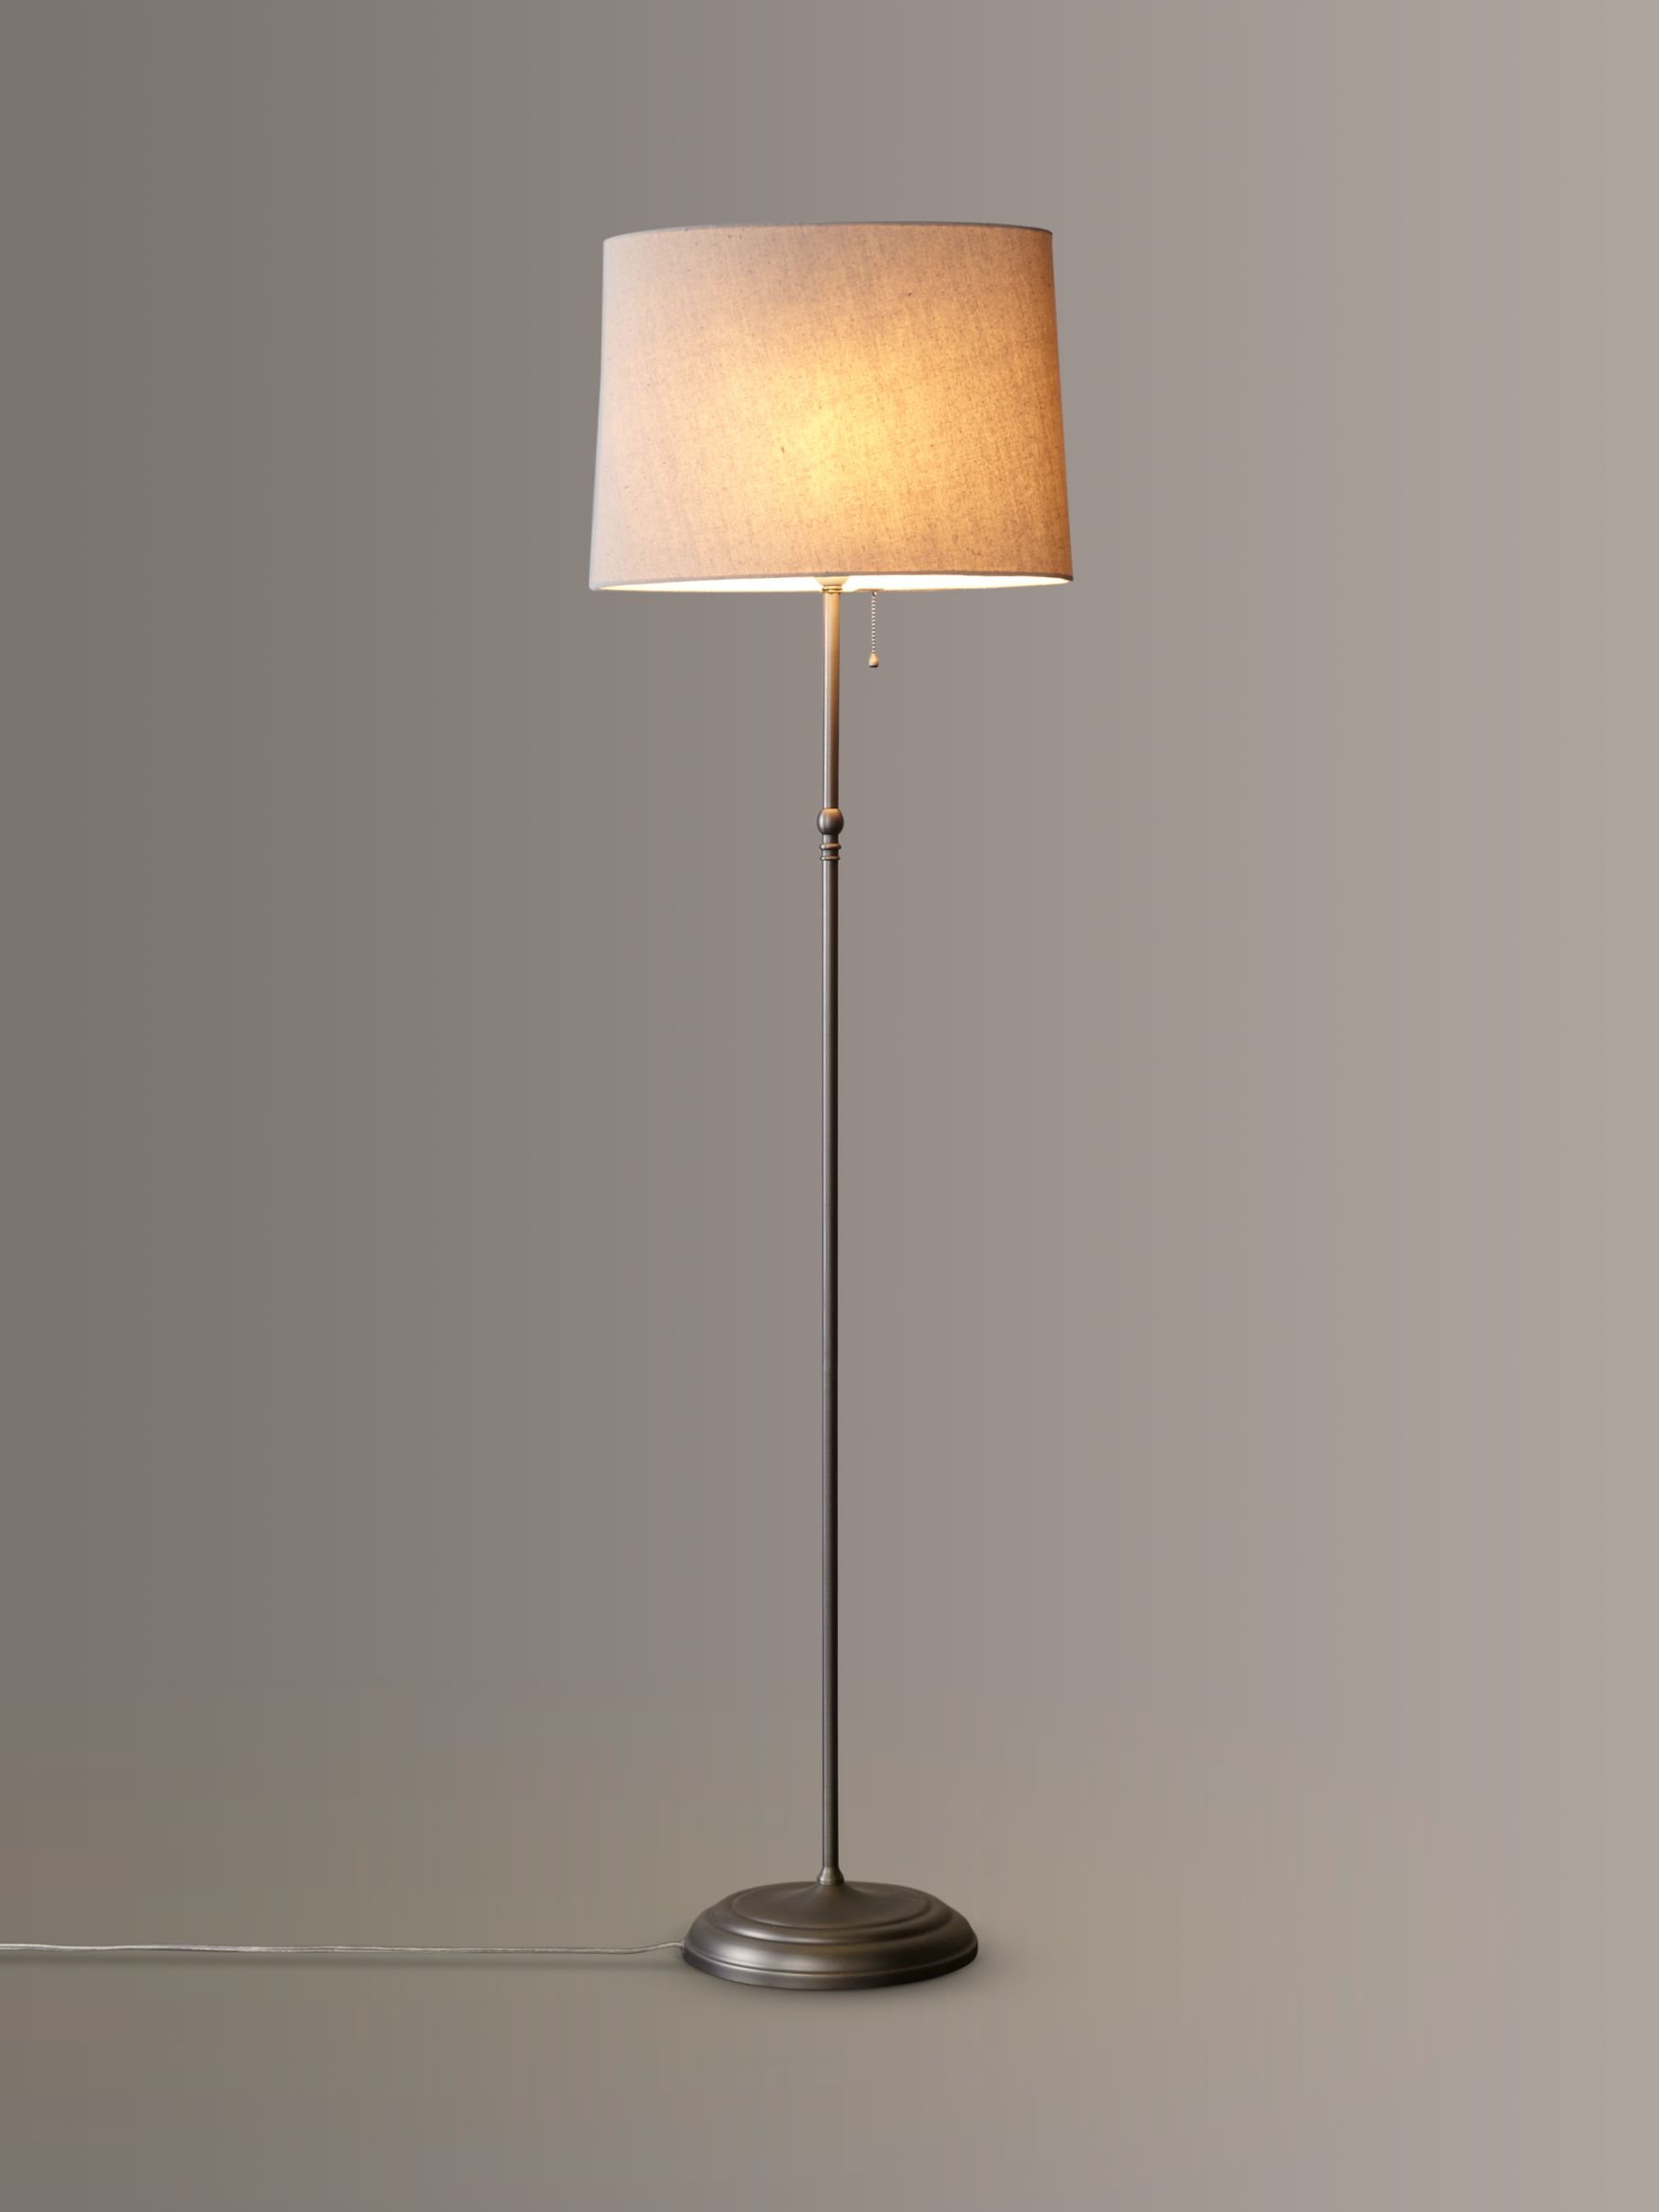 Photo of John lewis isabel oval shade floor lamp